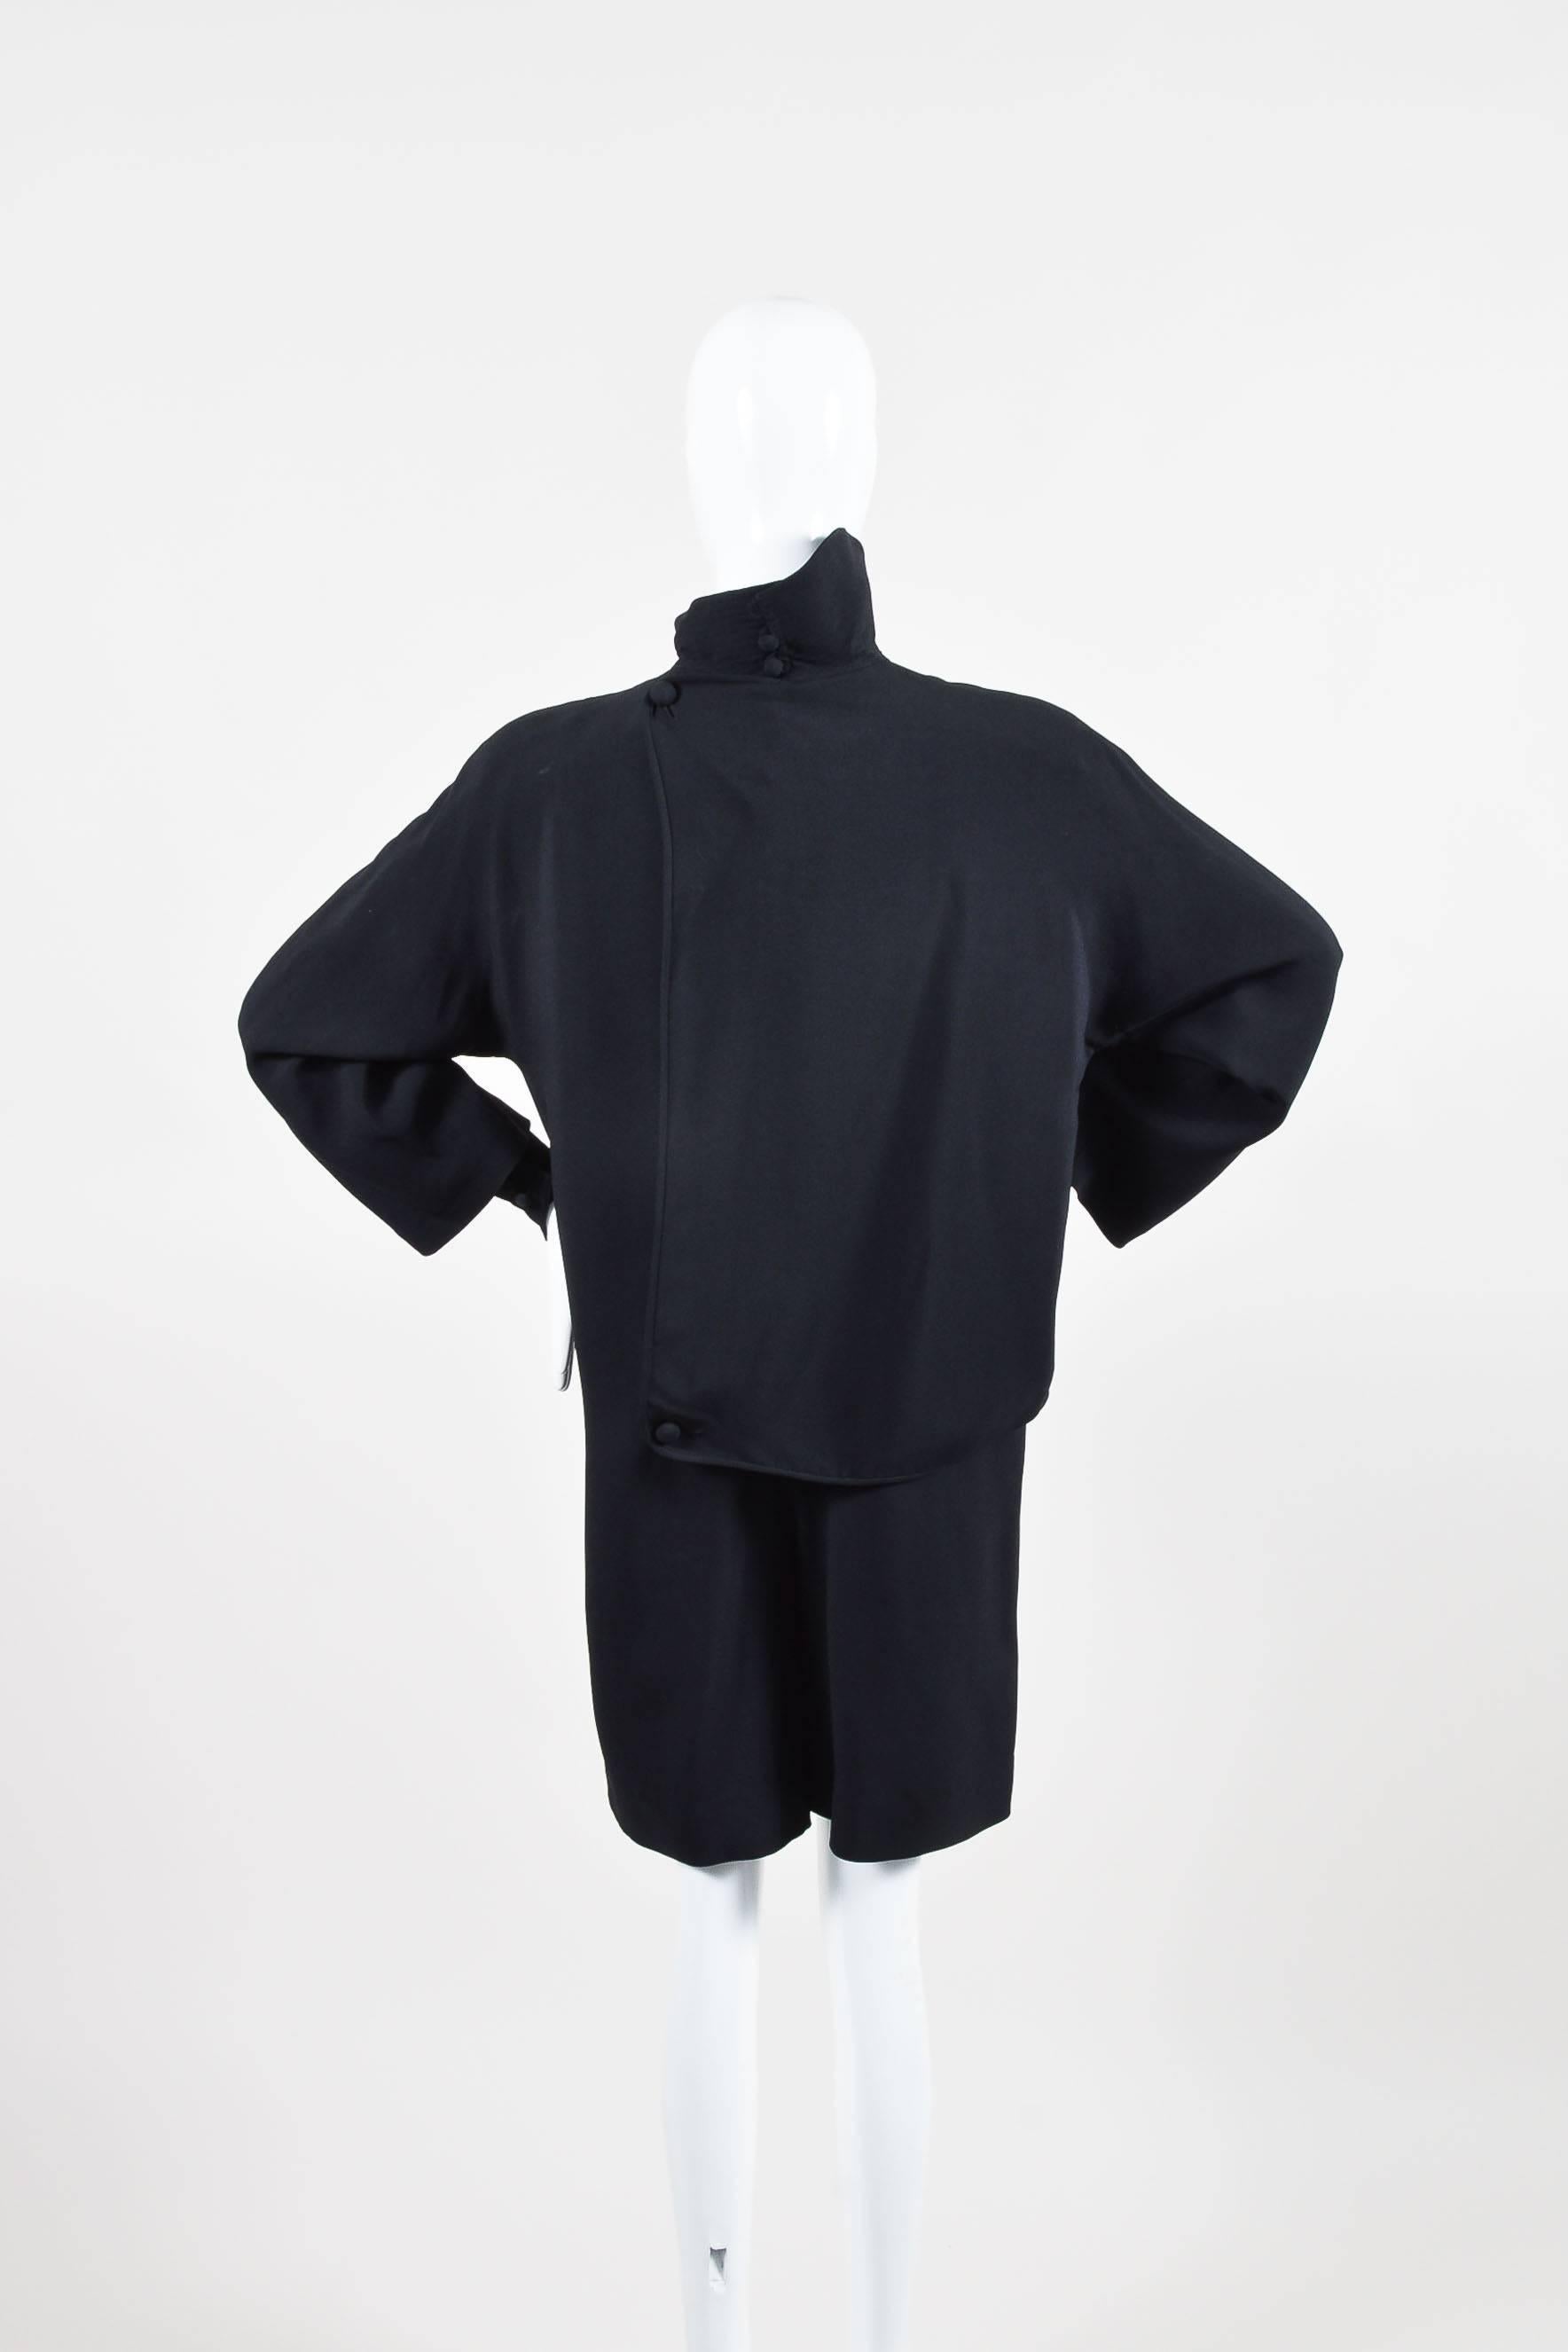 Vintage Gianfranco Ferre Black LS Turtleneck Shorts One Piece Suit Romper SZ 42 In Excellent Condition For Sale In Chicago, IL